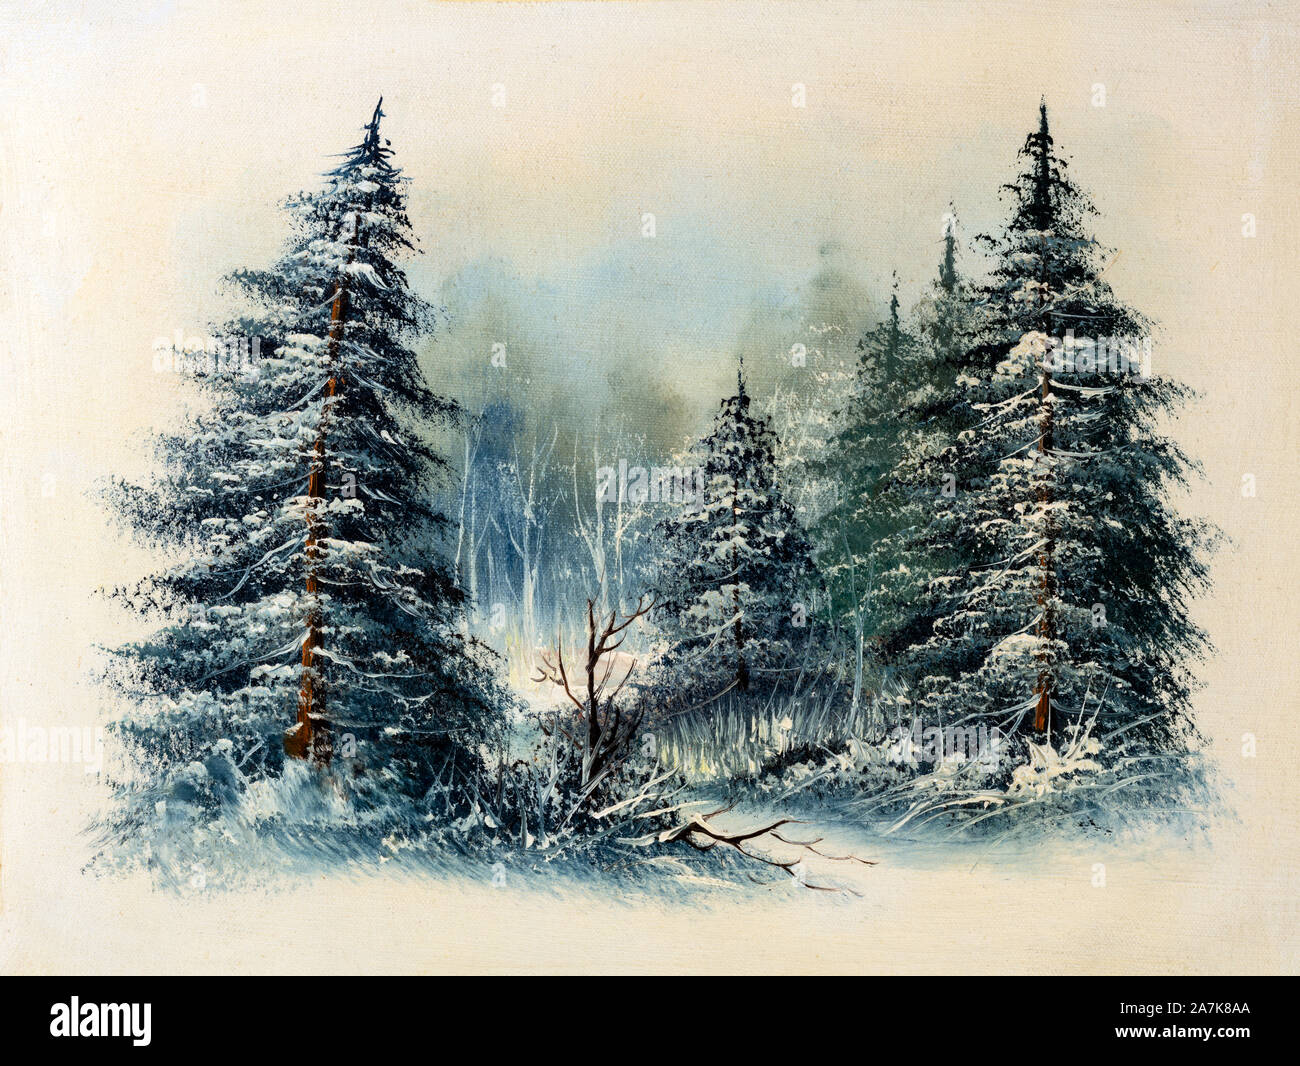 Paintings Of Trees In Winter